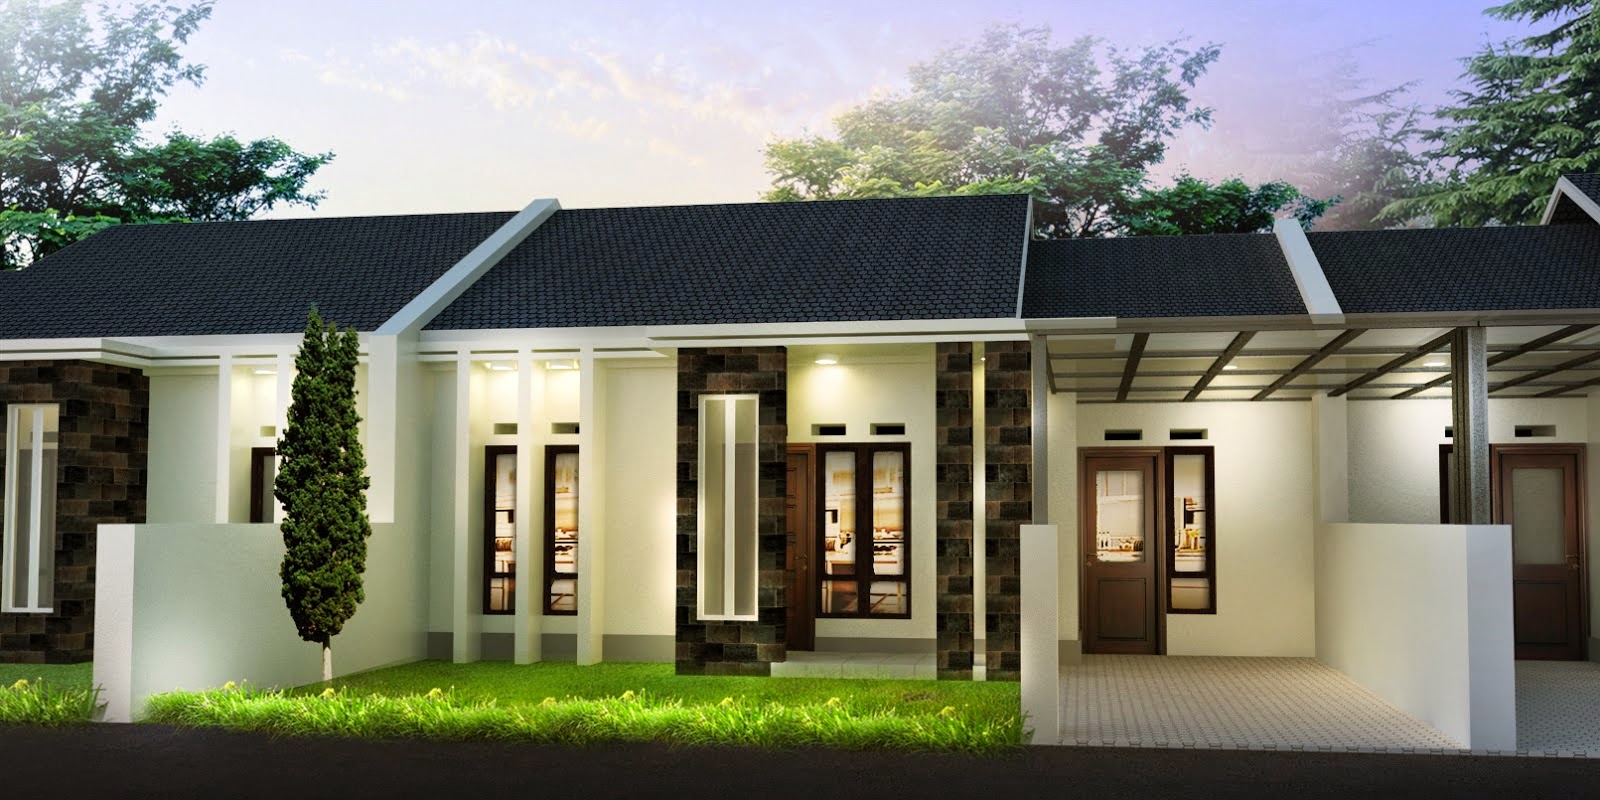 Model Rumah Minimalis Style Bali Desain Pojok Box House Agung